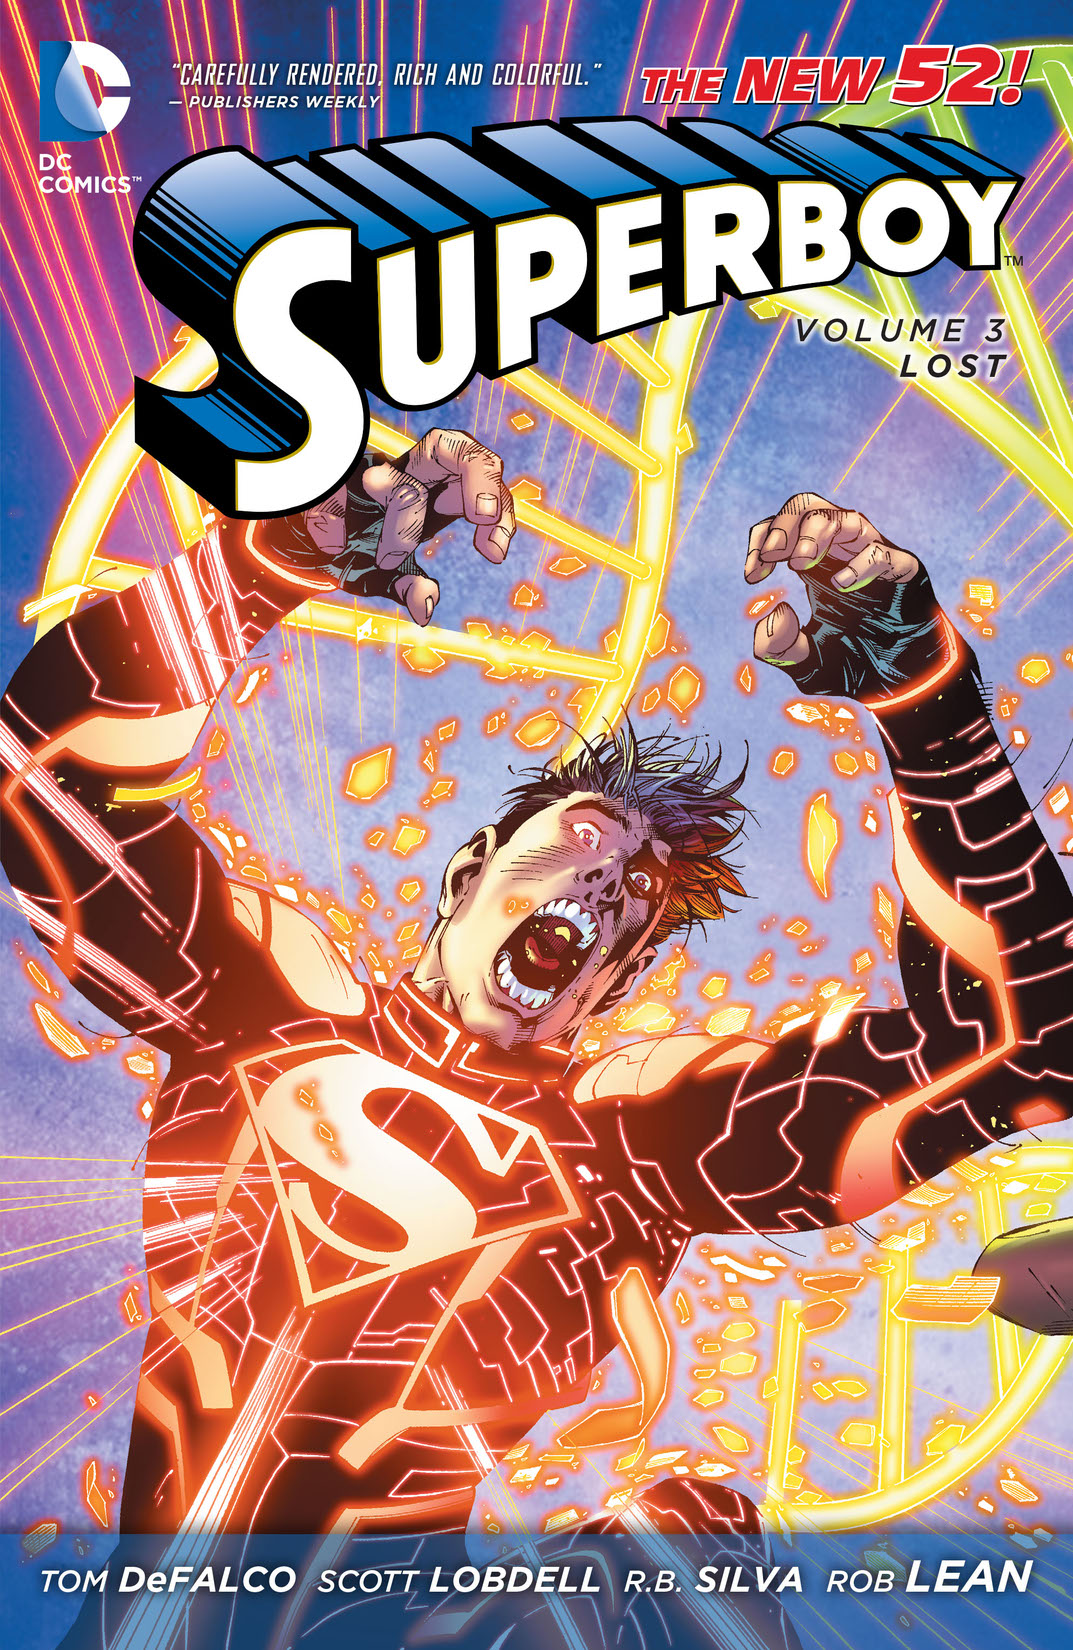 Superboy Vol. 3: Lost preview images